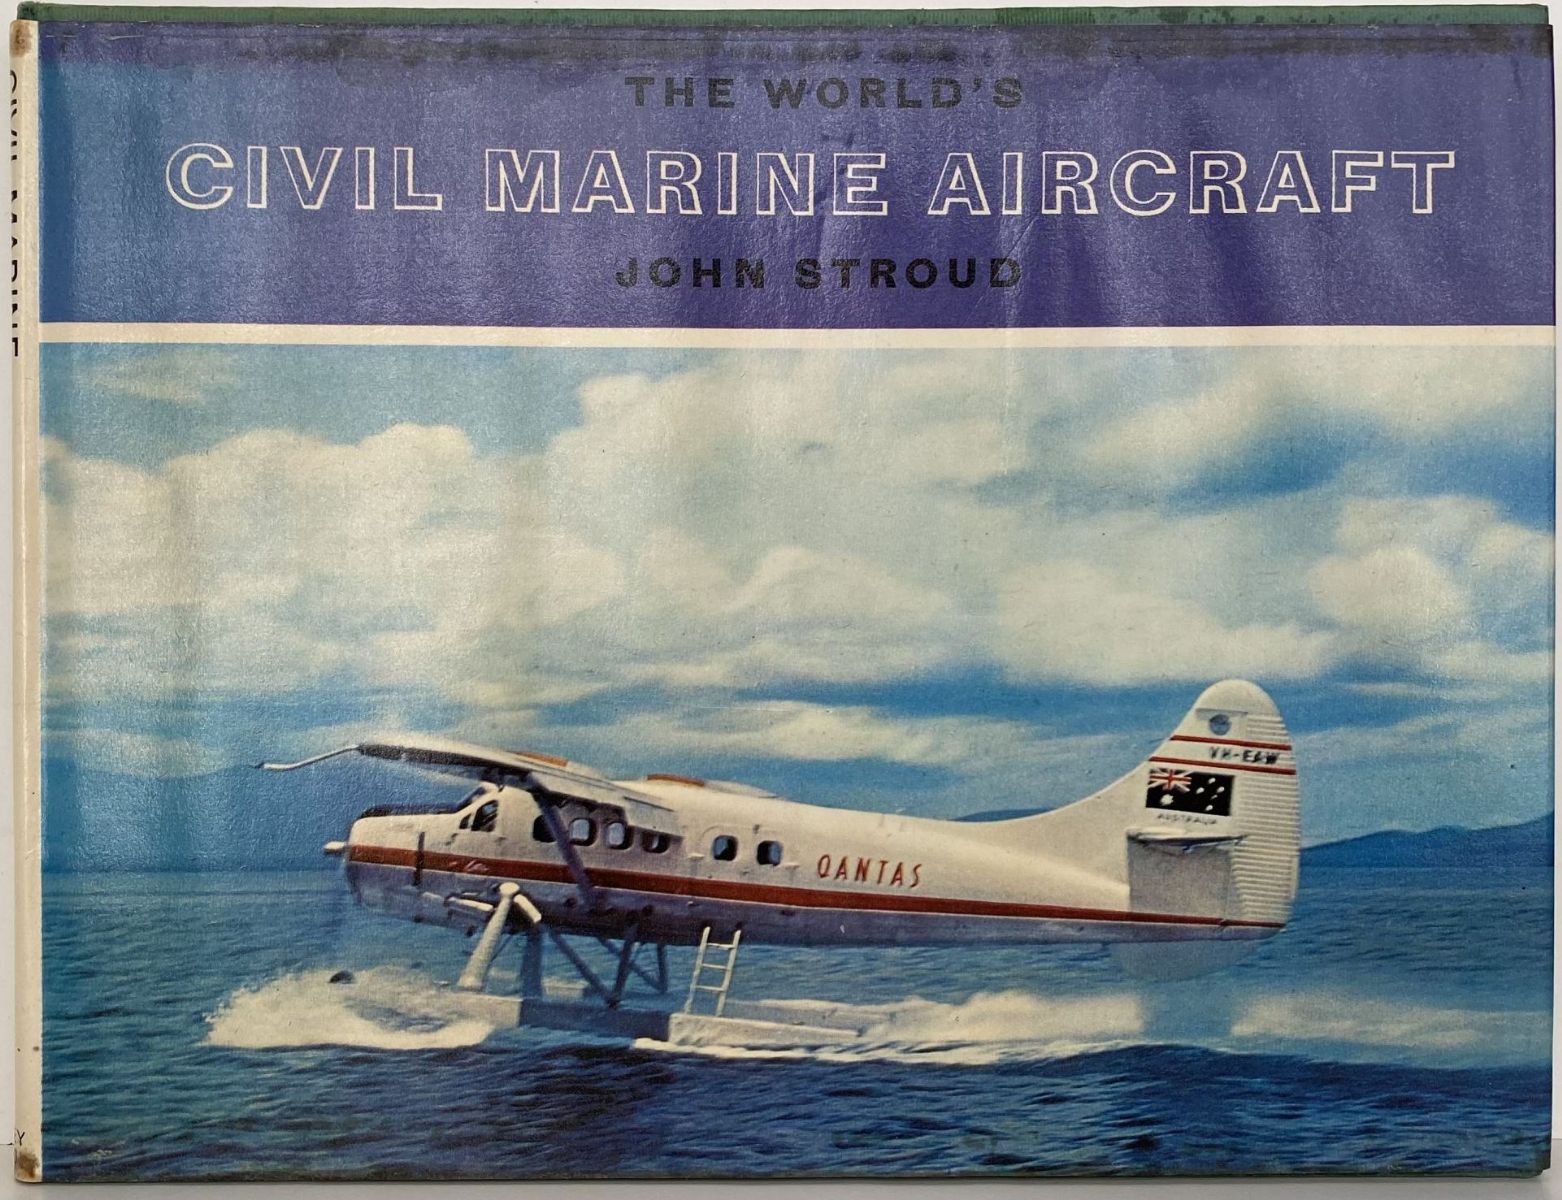 The Worlds Civil Marine Aircraft